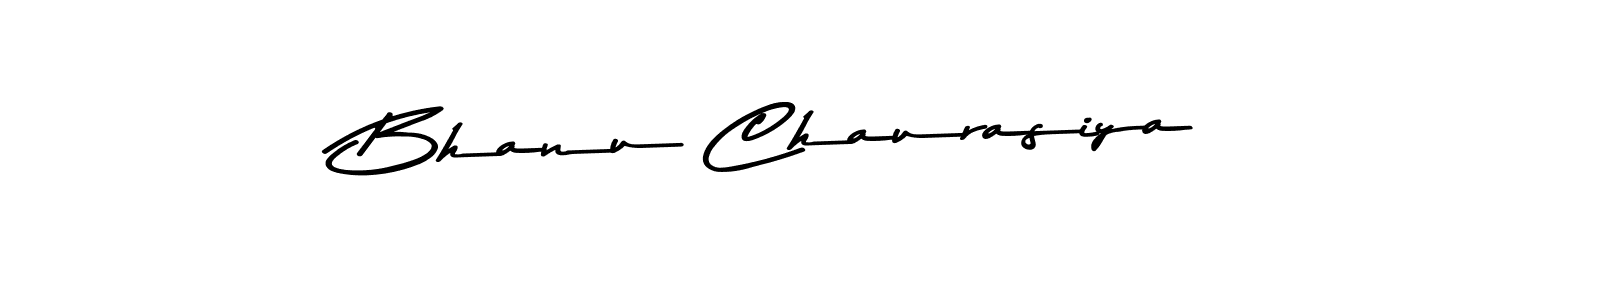 How to Draw Bhanu Chaurasiya signature style? Asem Kandis PERSONAL USE is a latest design signature styles for name Bhanu Chaurasiya. Bhanu Chaurasiya signature style 9 images and pictures png